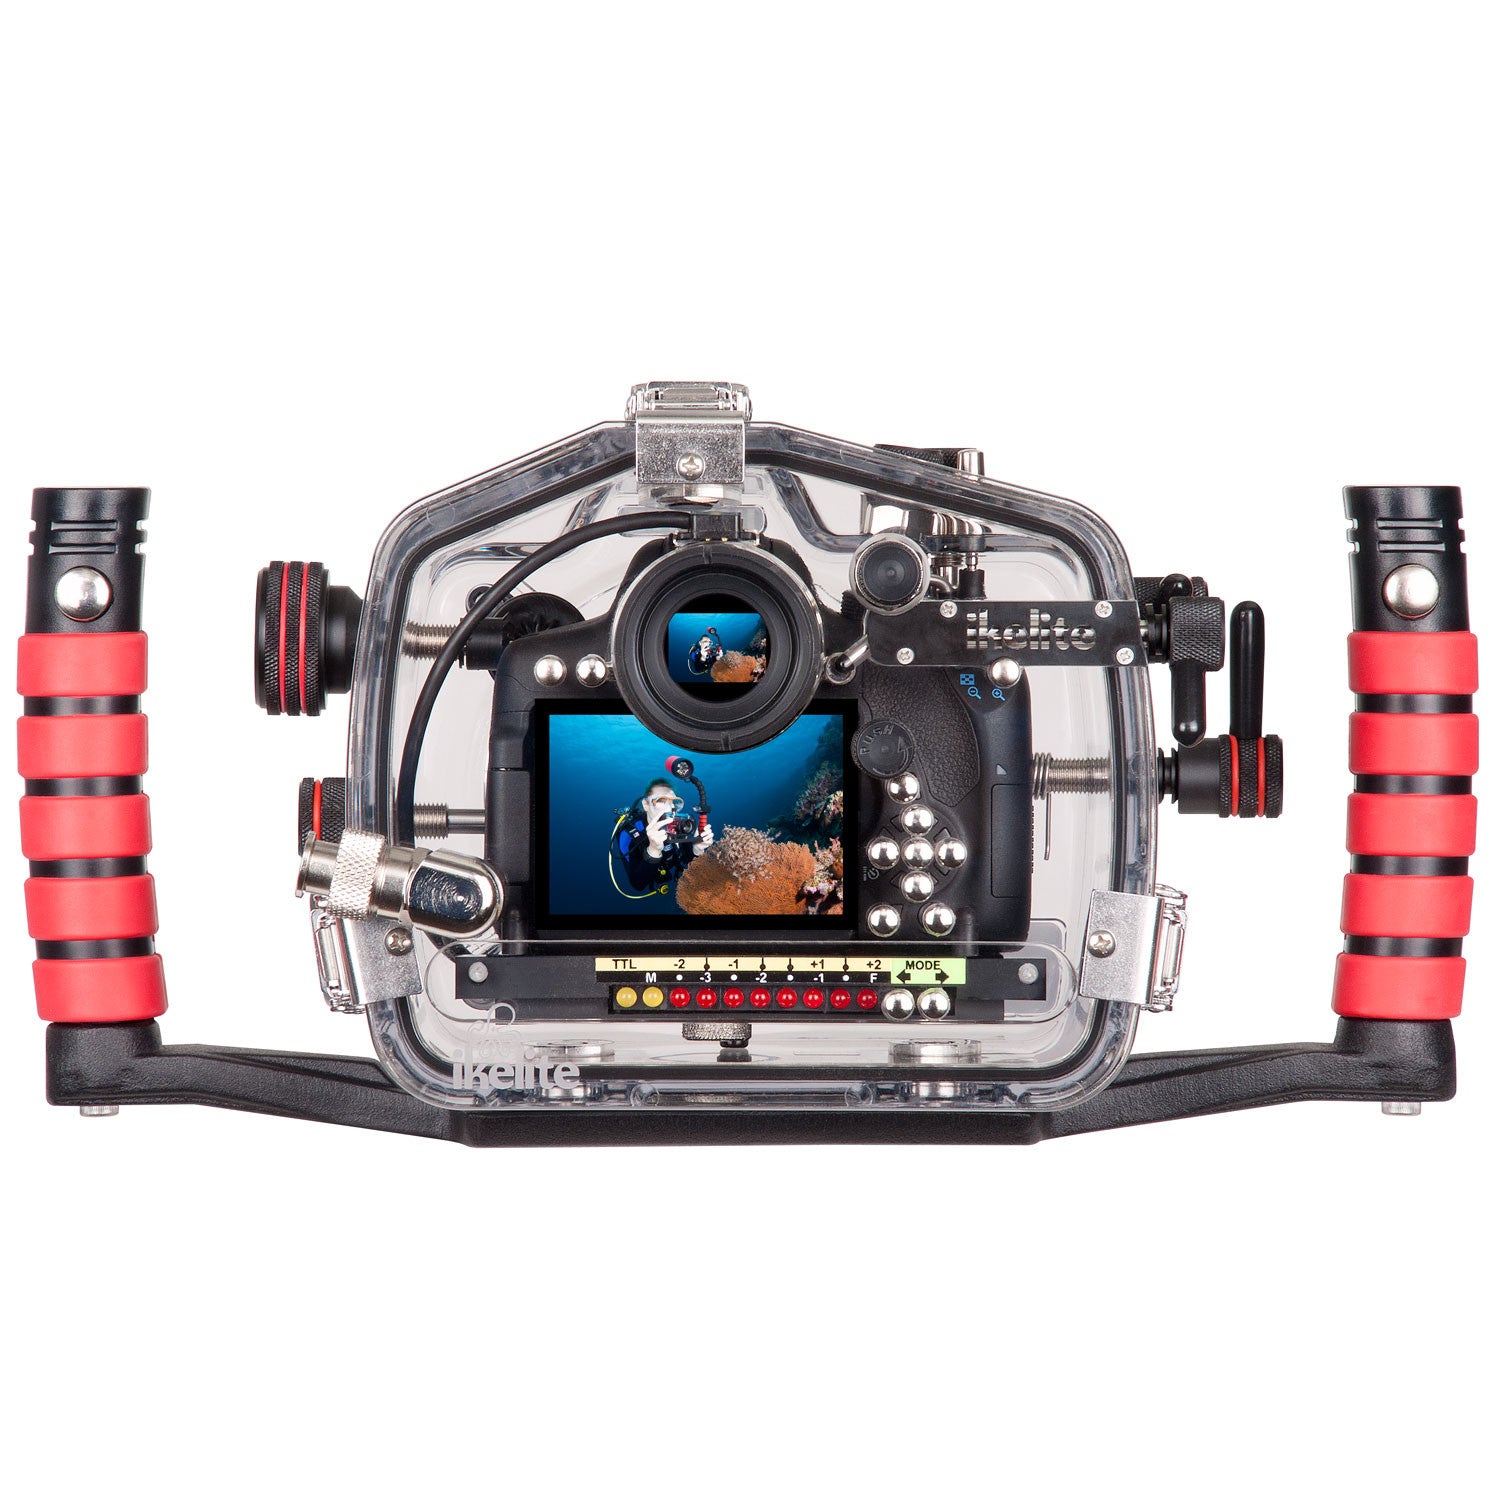 Underwater Housing for Canon EOS 750D, Rebel T6i